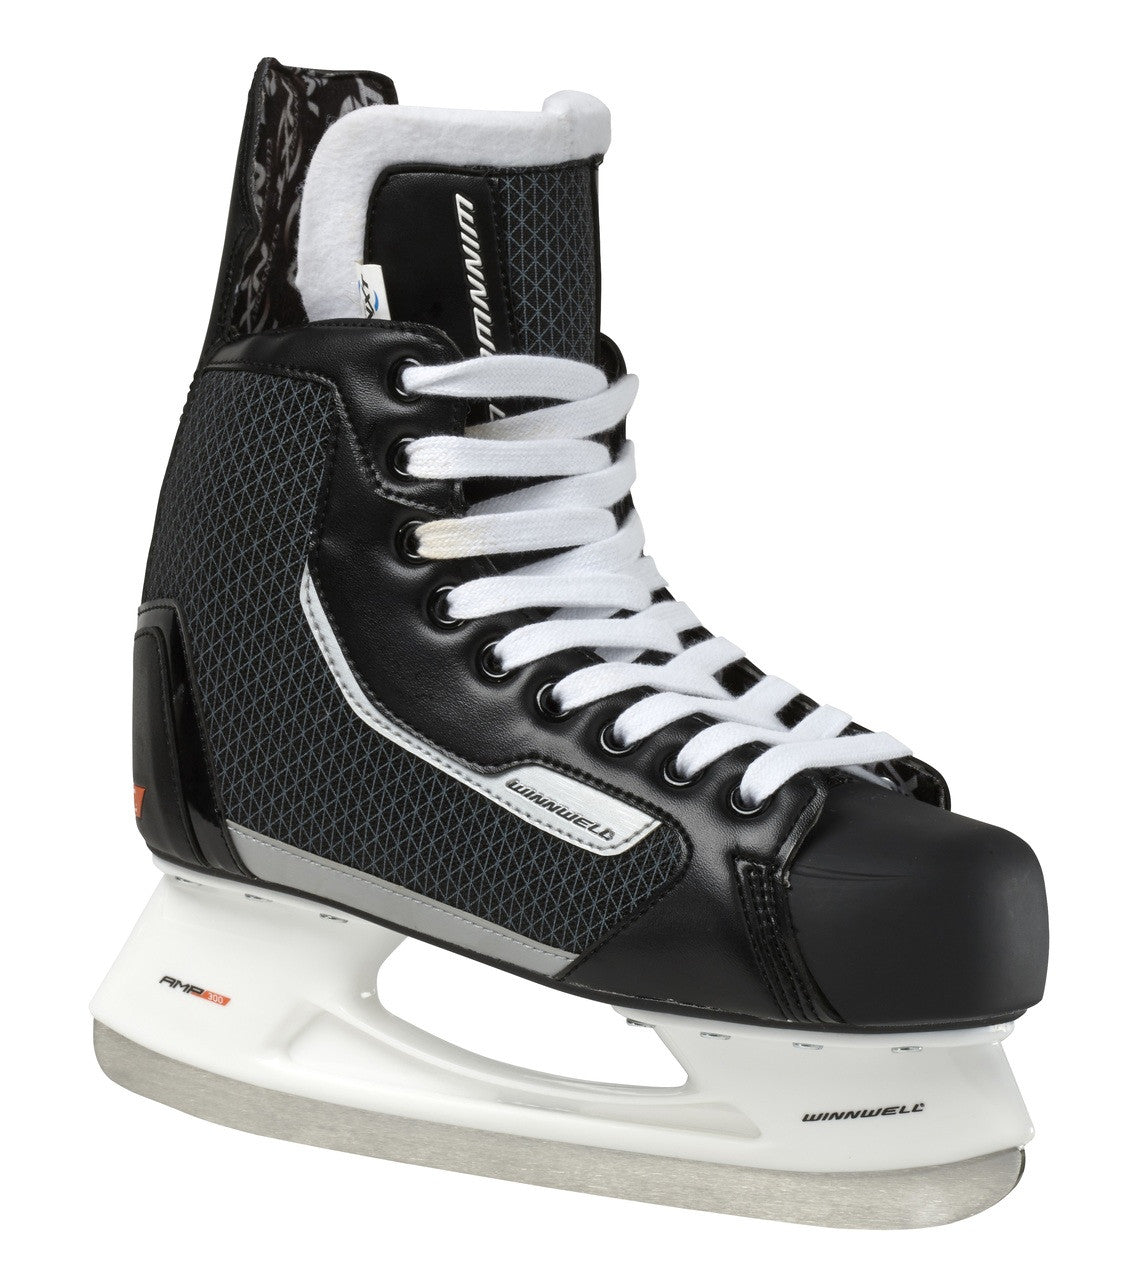 Winnwell Ice Skates AMP300 Size Range Black New SK1703 Hockey Skates Youth 8-5